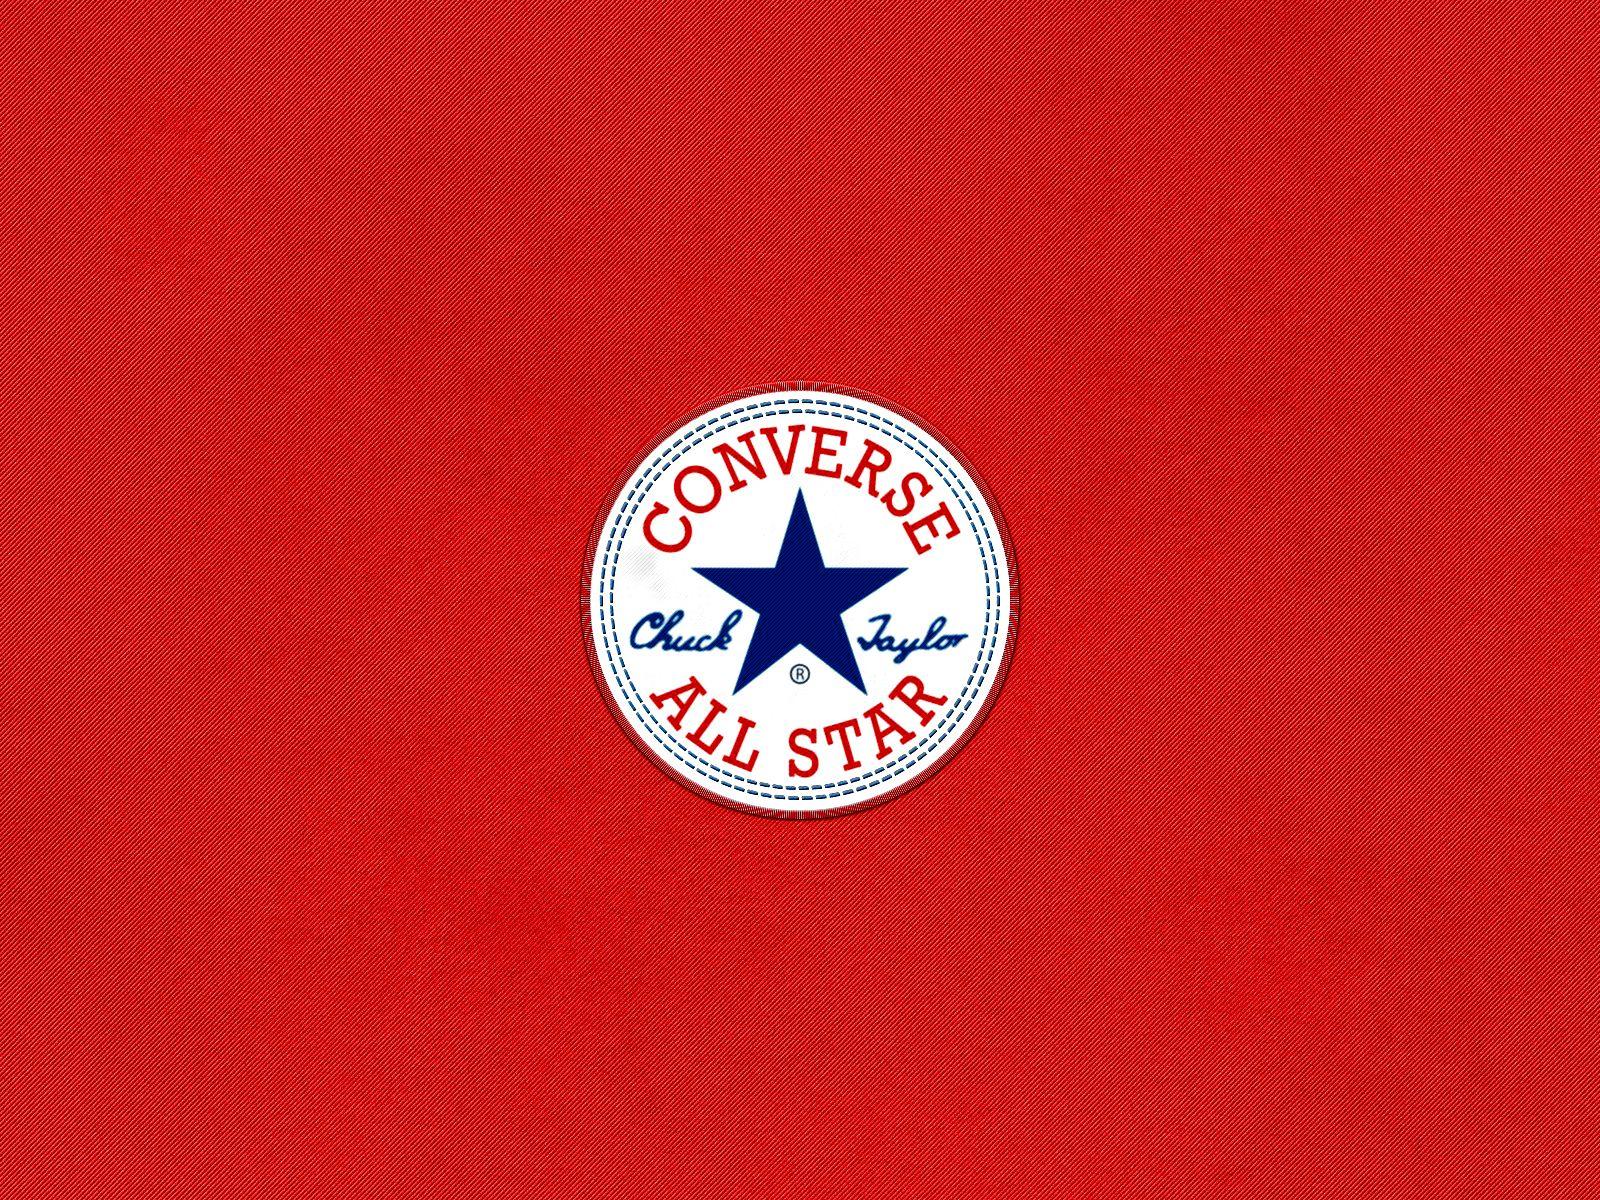 Converse Logo Wallpaper 17053 1600x1200 px